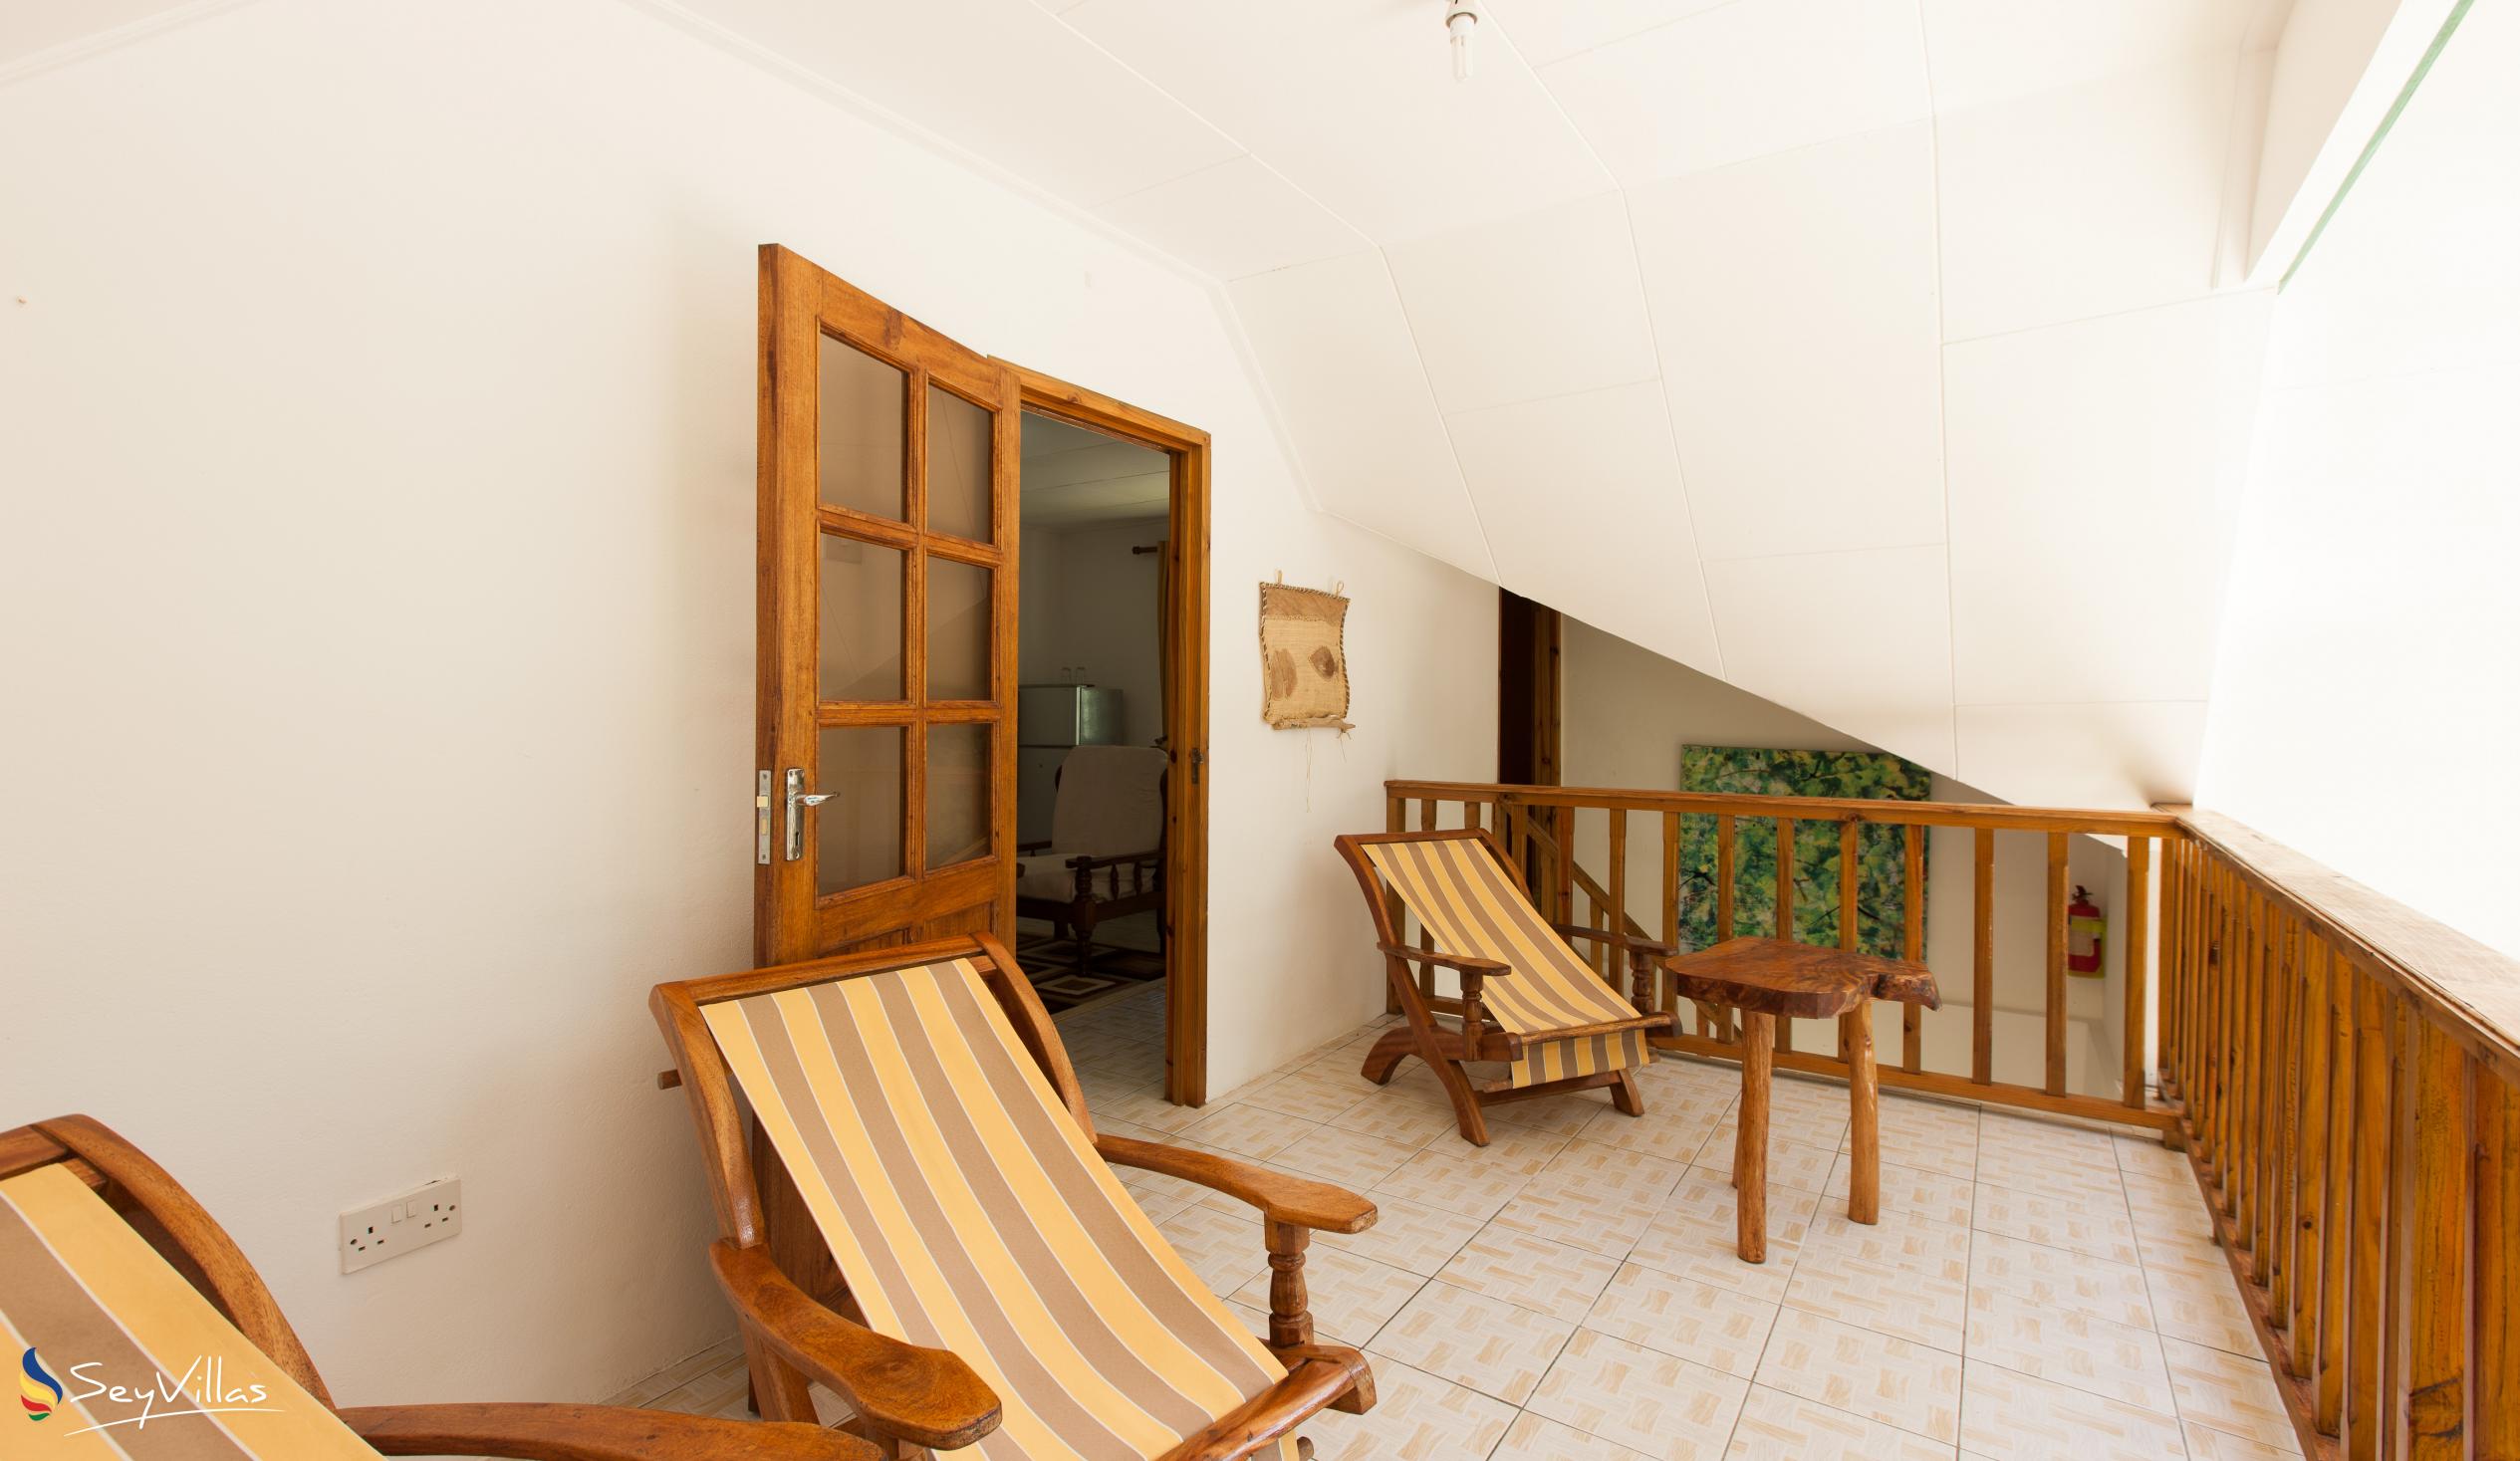 Foto 47: Tannette's Villa - Innenbereich - La Digue (Seychellen)